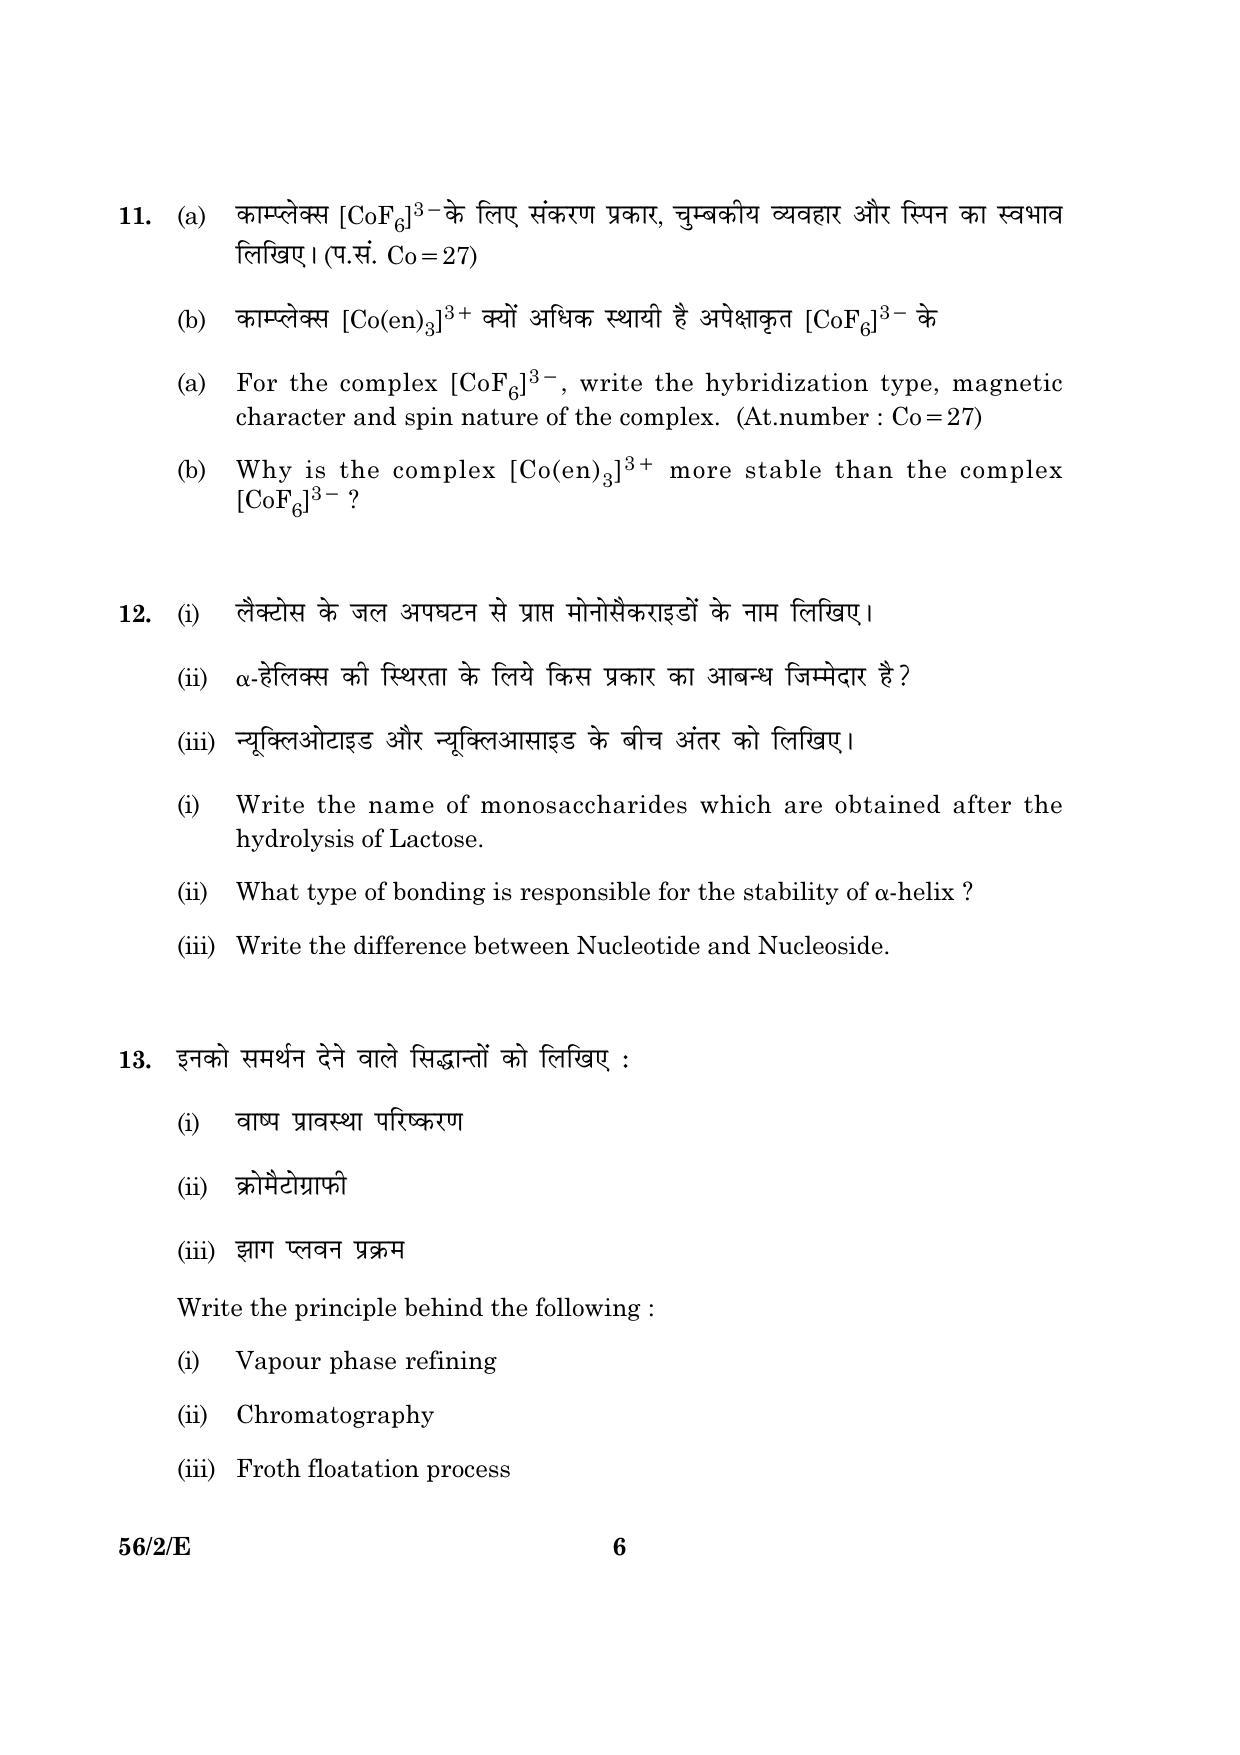 CBSE Class 12 056 Set 2 E Chemistry 2016 Question Paper - Page 6